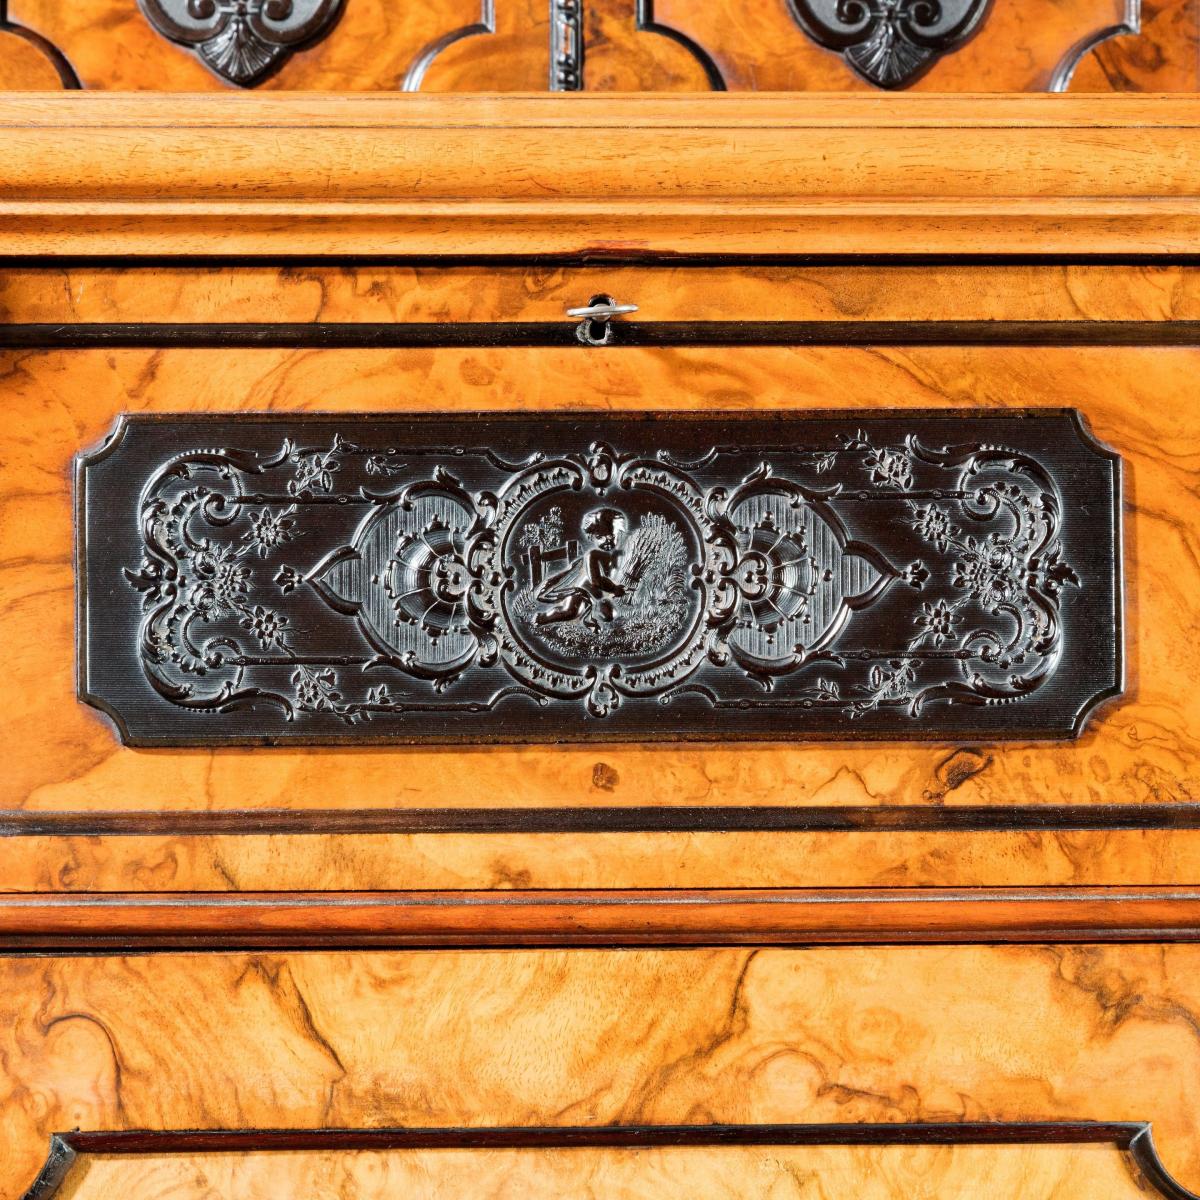 A superb quality burr walnut antique cabinet